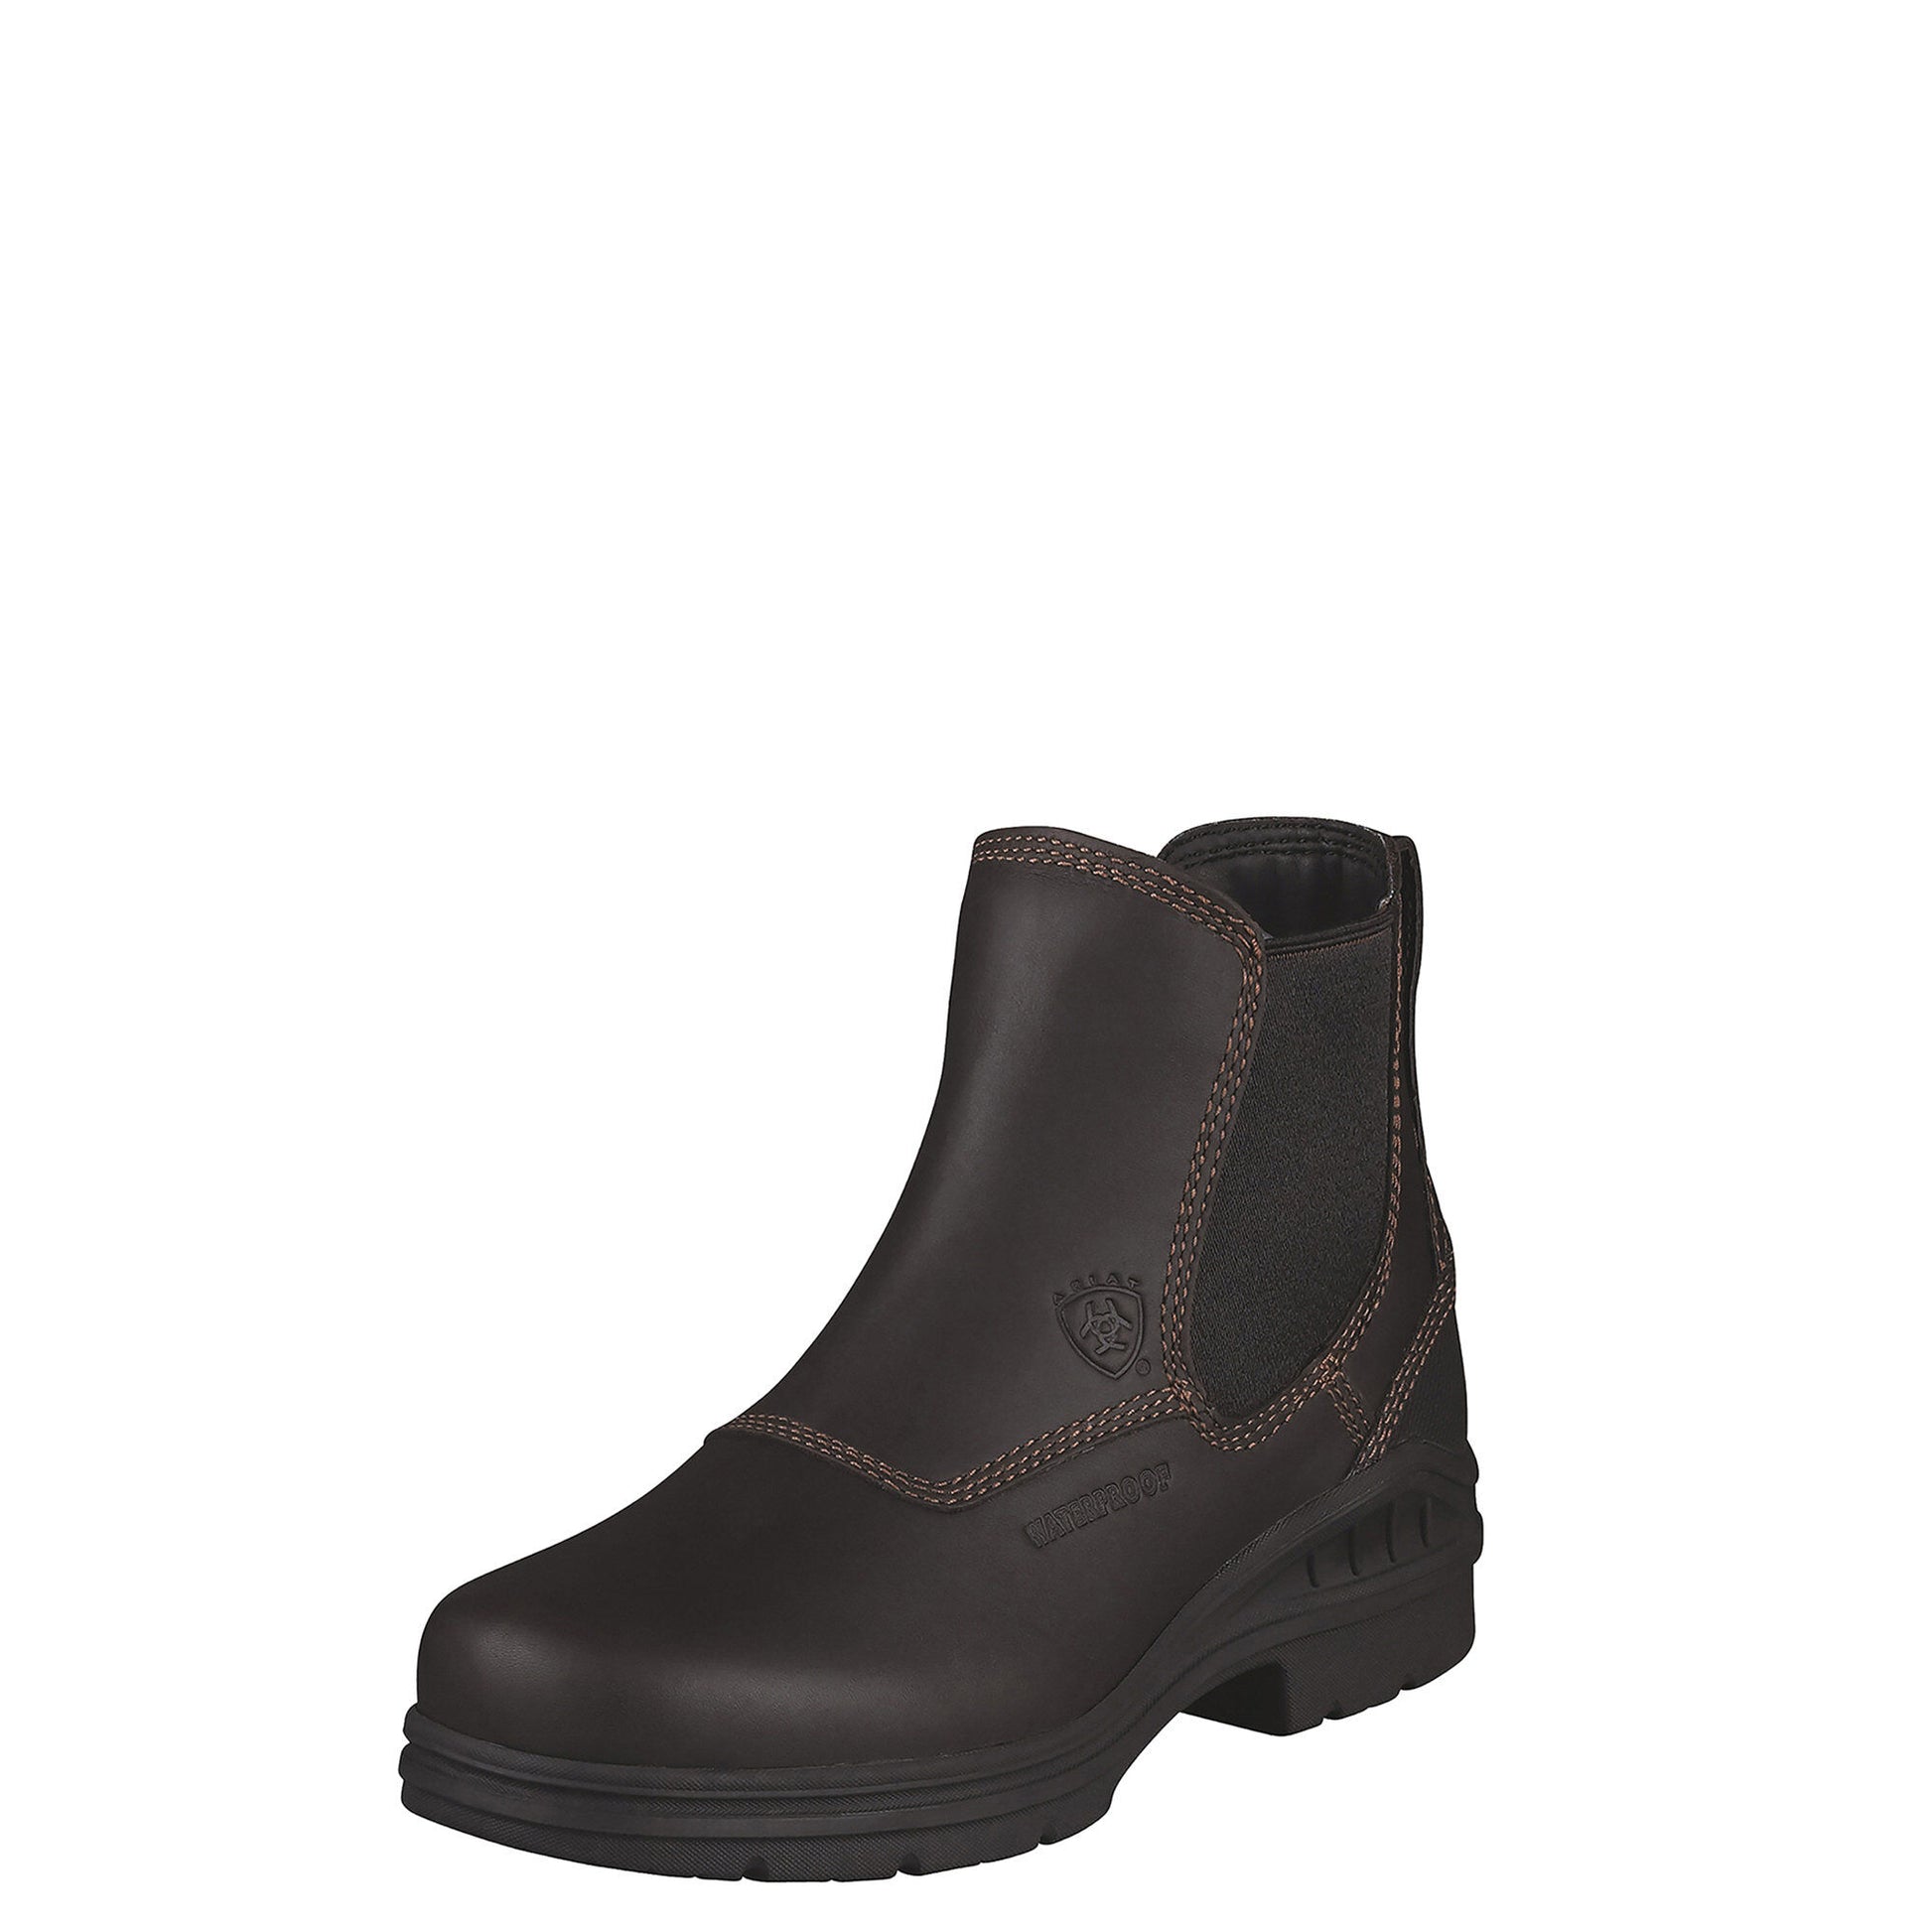 Ariat Women's Barnyard Twin Gore H2O Boot - Dark Brown - French's Boots